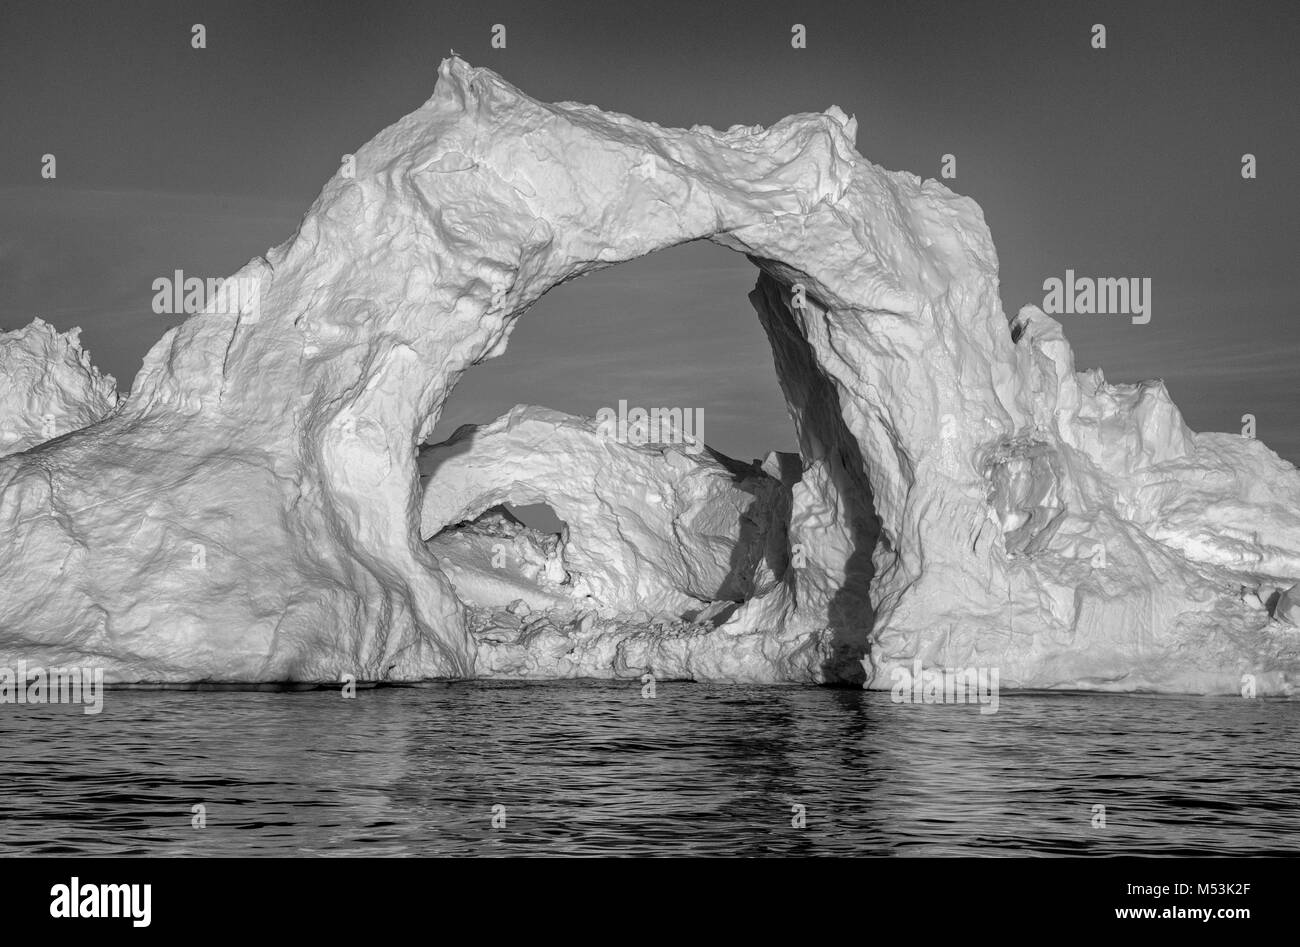 Icebergs from the icefjord, Ilulissat, Disko Bay, Greenland, Polar Region Stock Photo